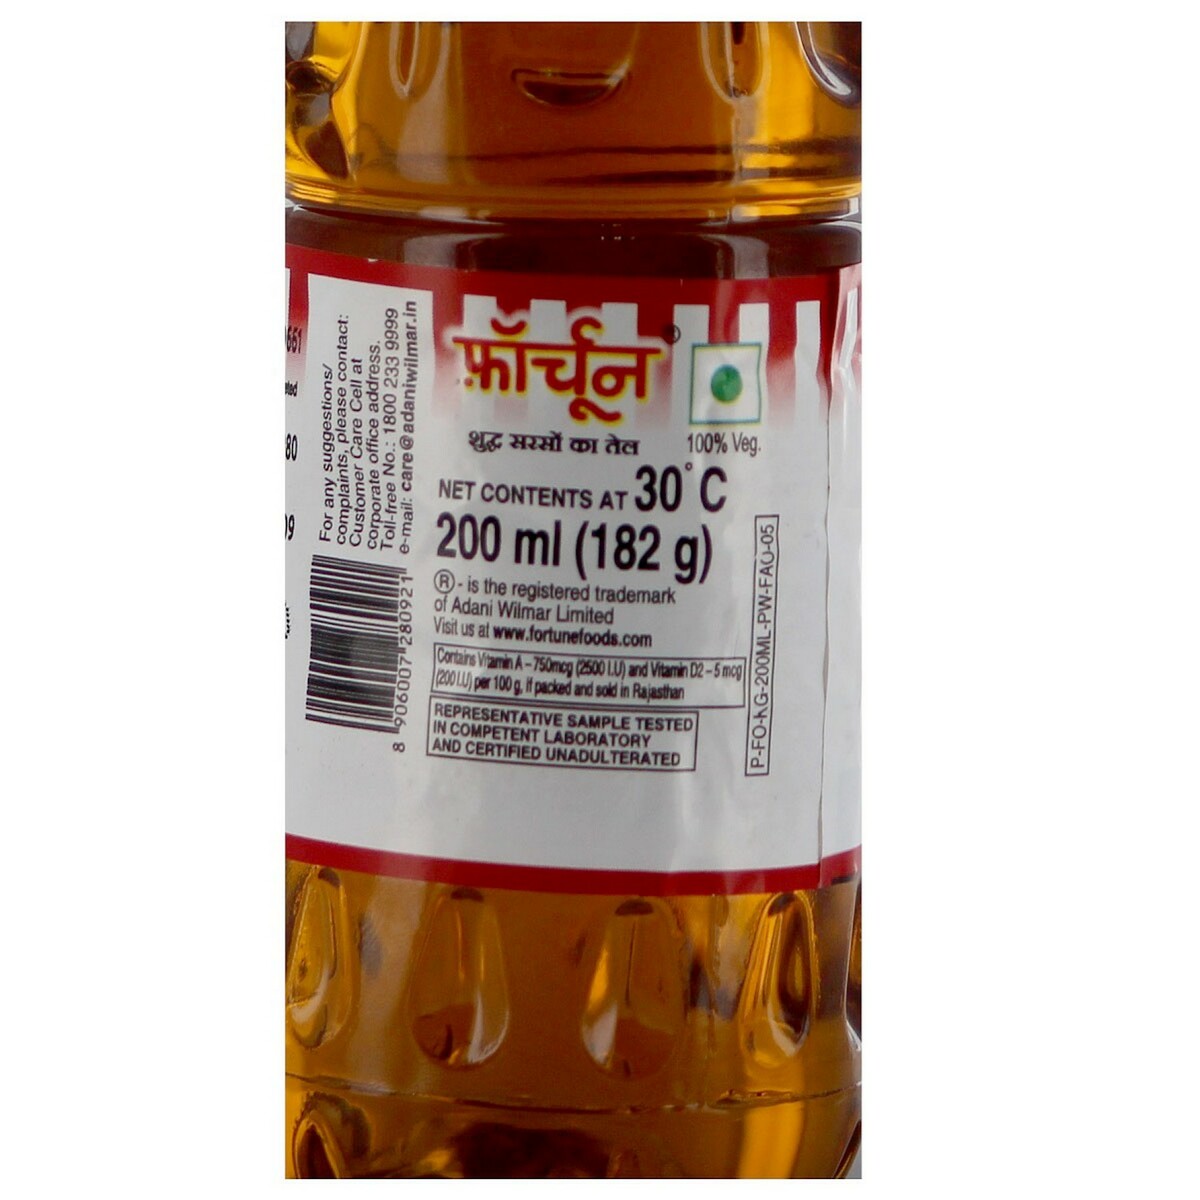 Fortune Kachi Ghani Pure Mustard Oil 200ml